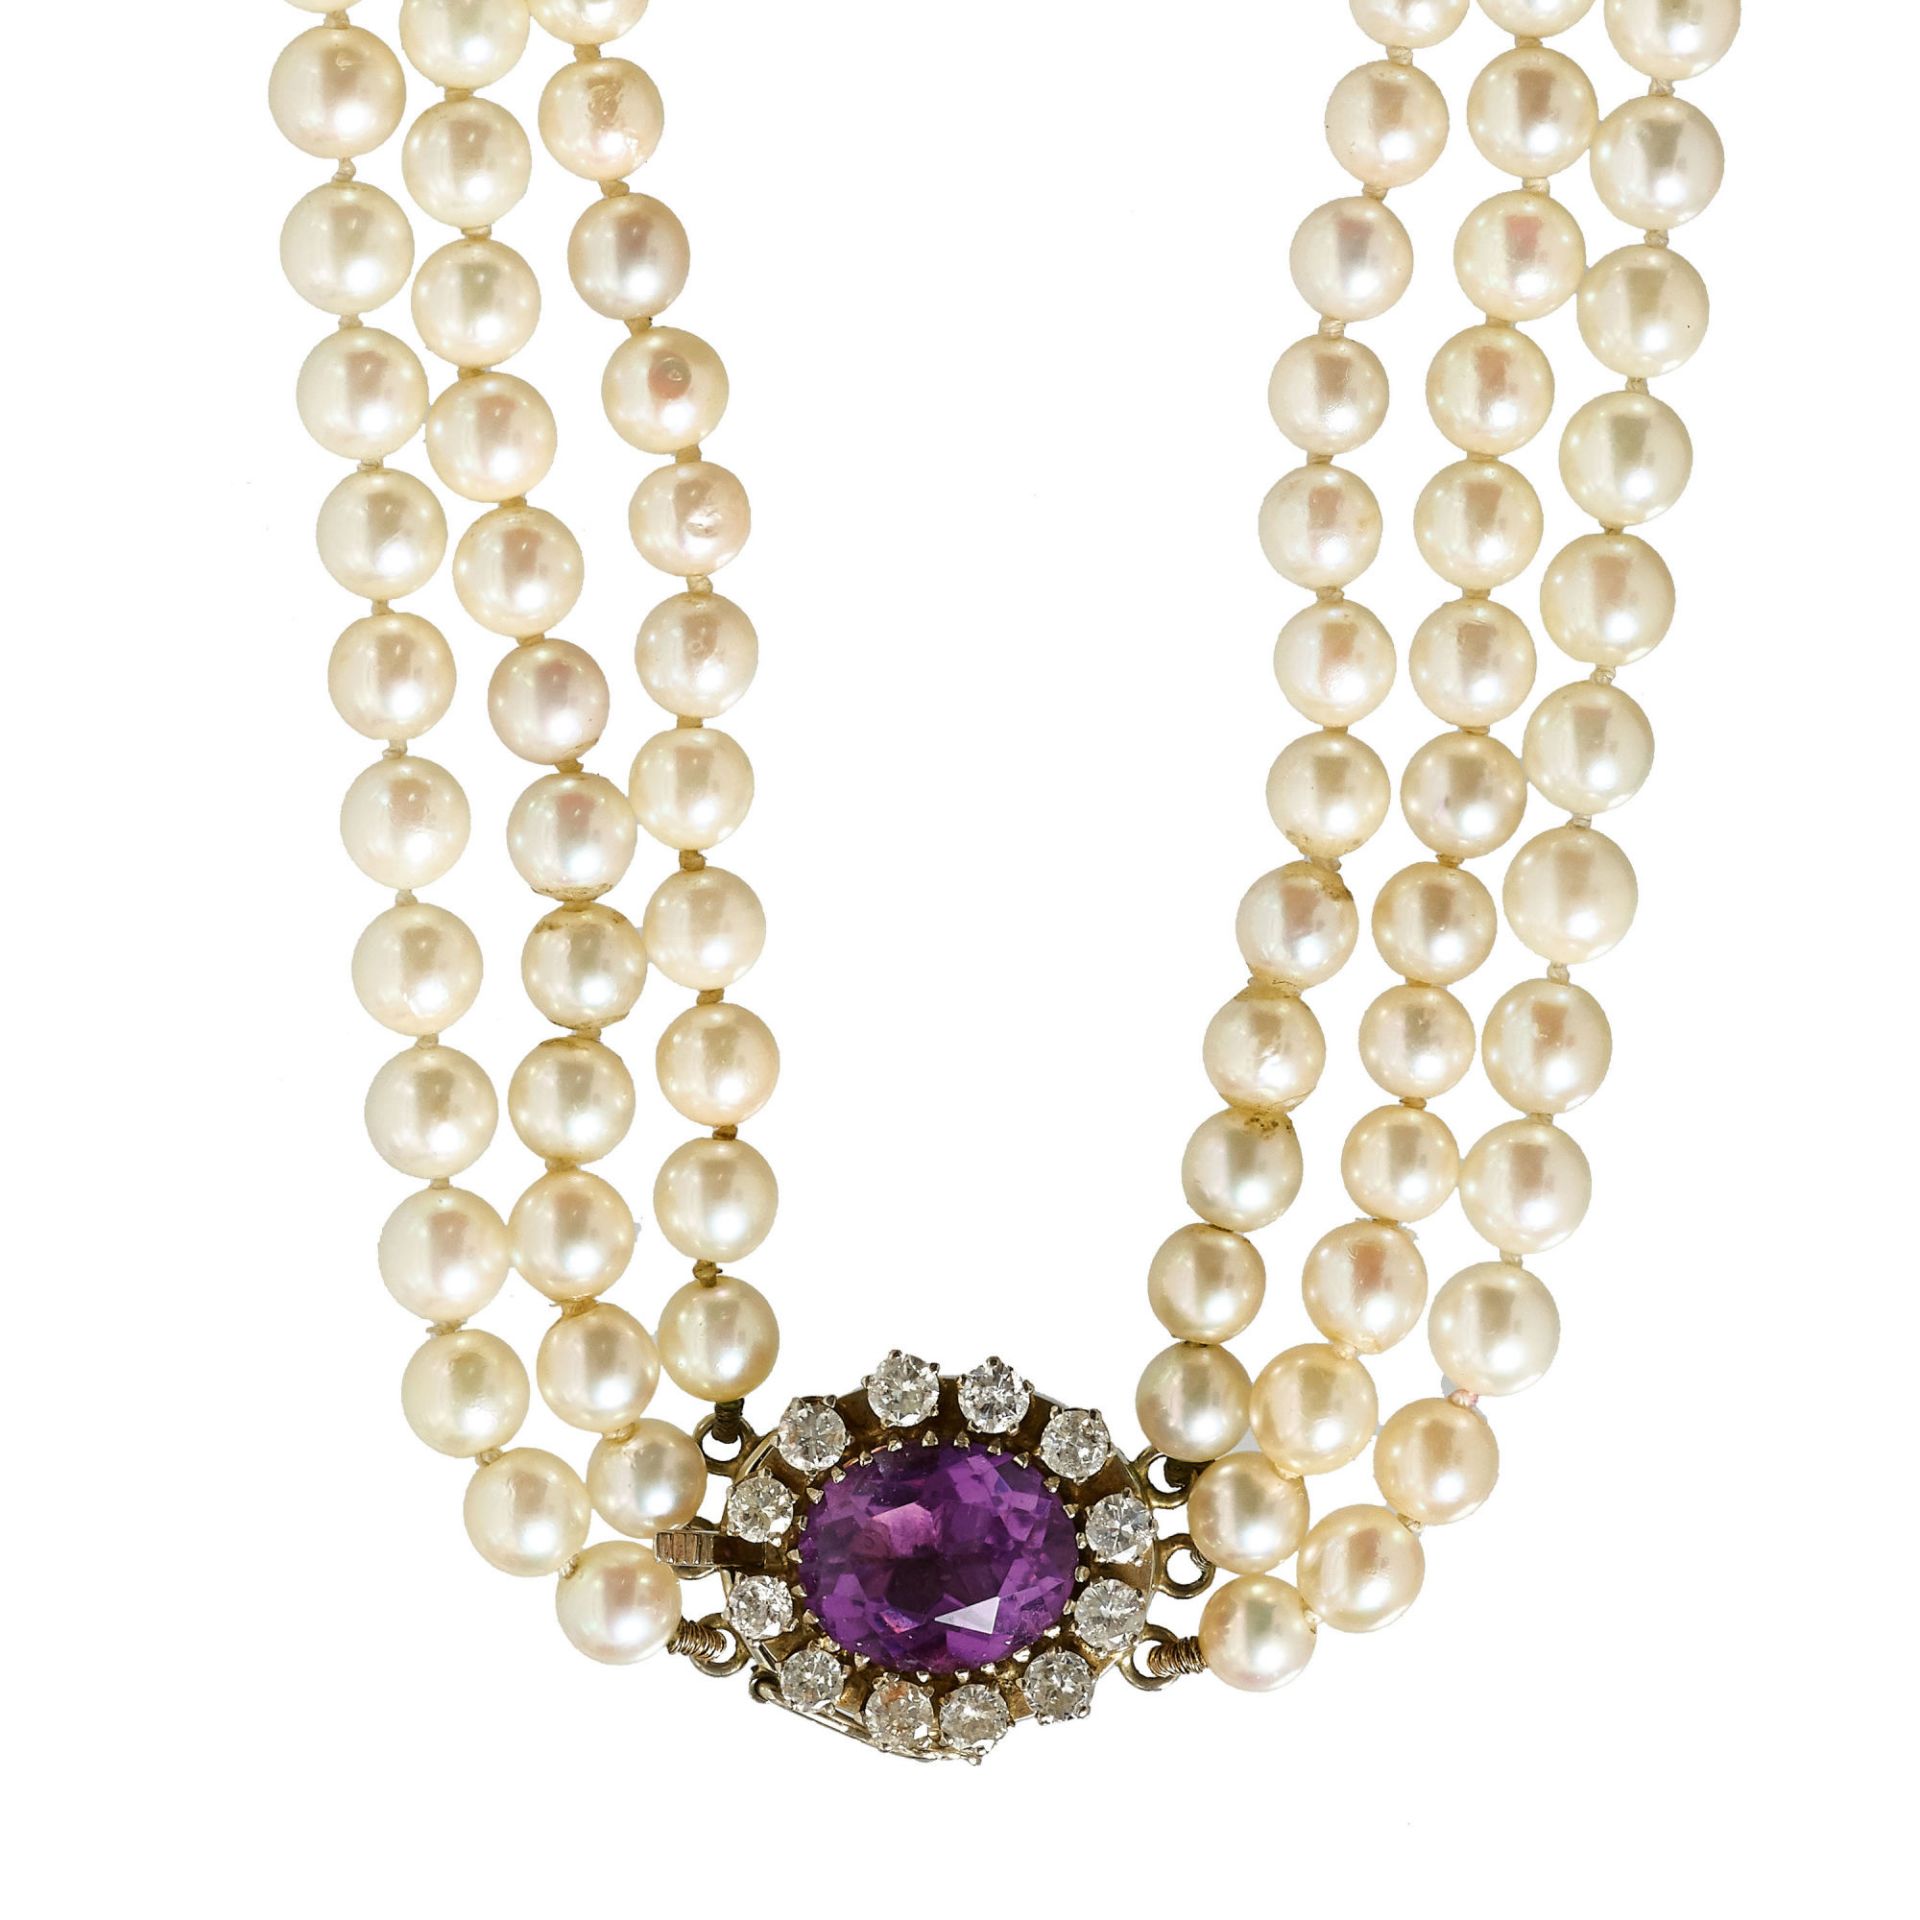 AMETHYST-PERLEN-COLLIER / Amethyst-pearl-necklace